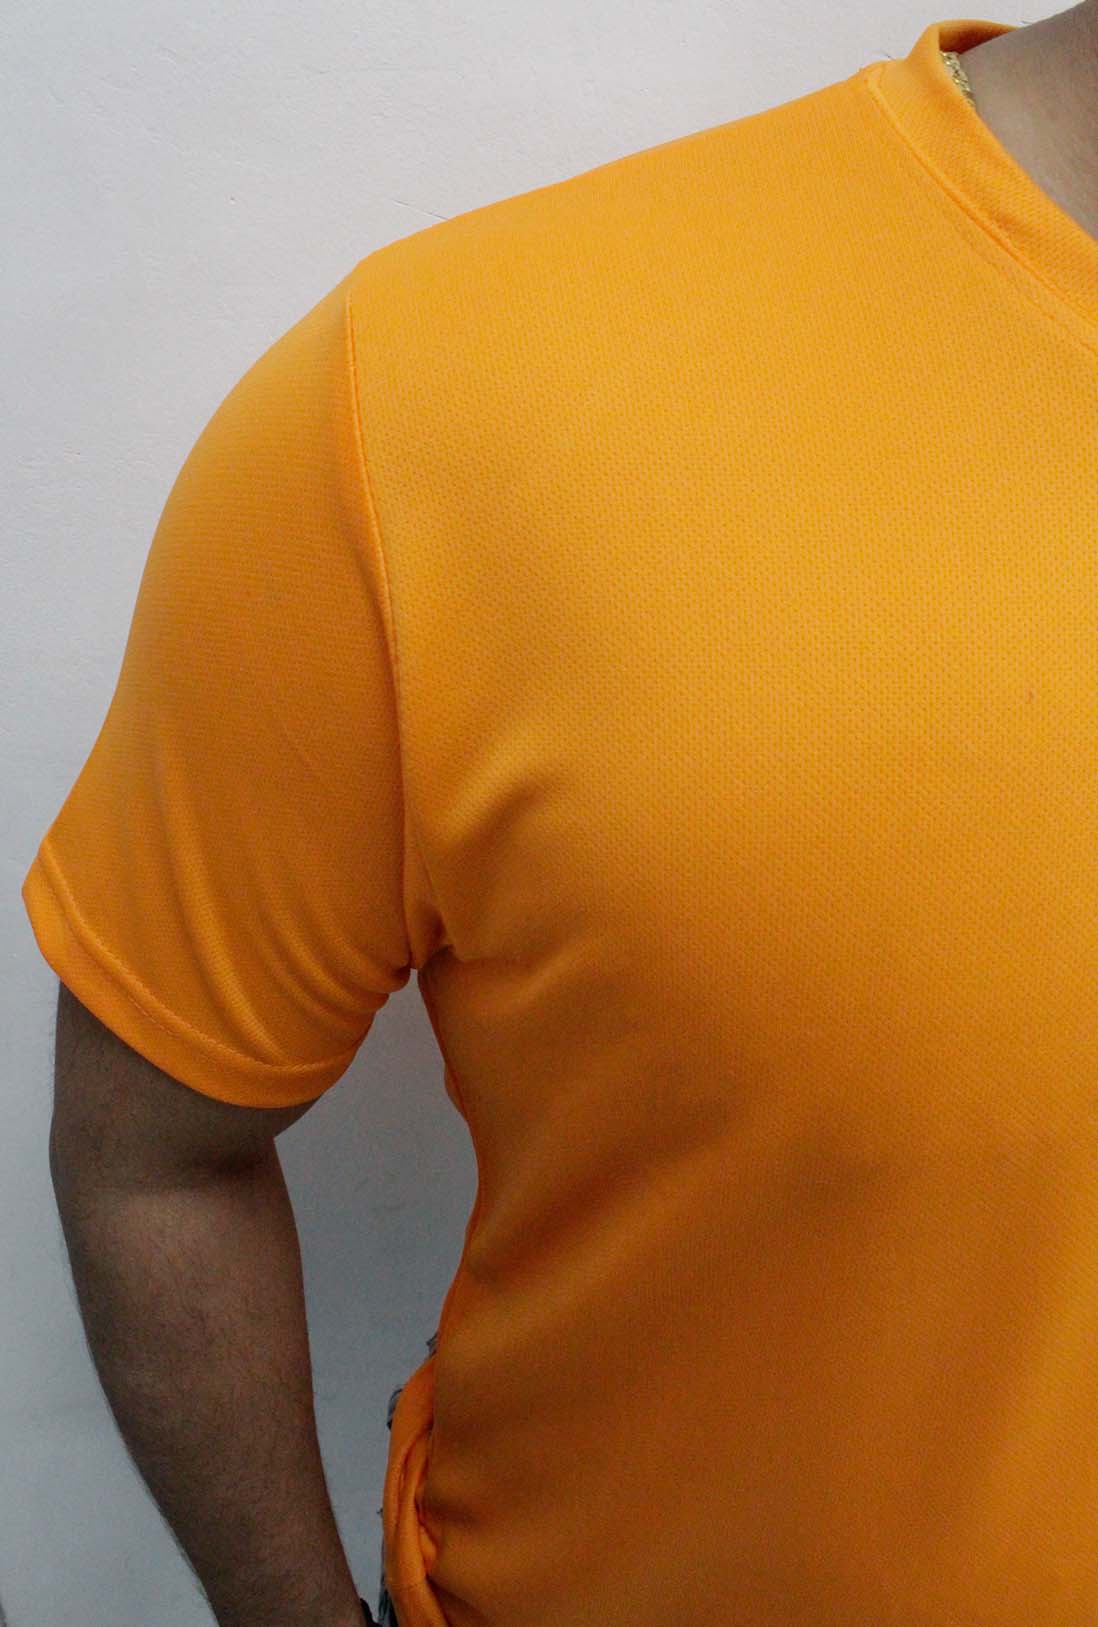 Men's Orange Active Wear T-Shirt